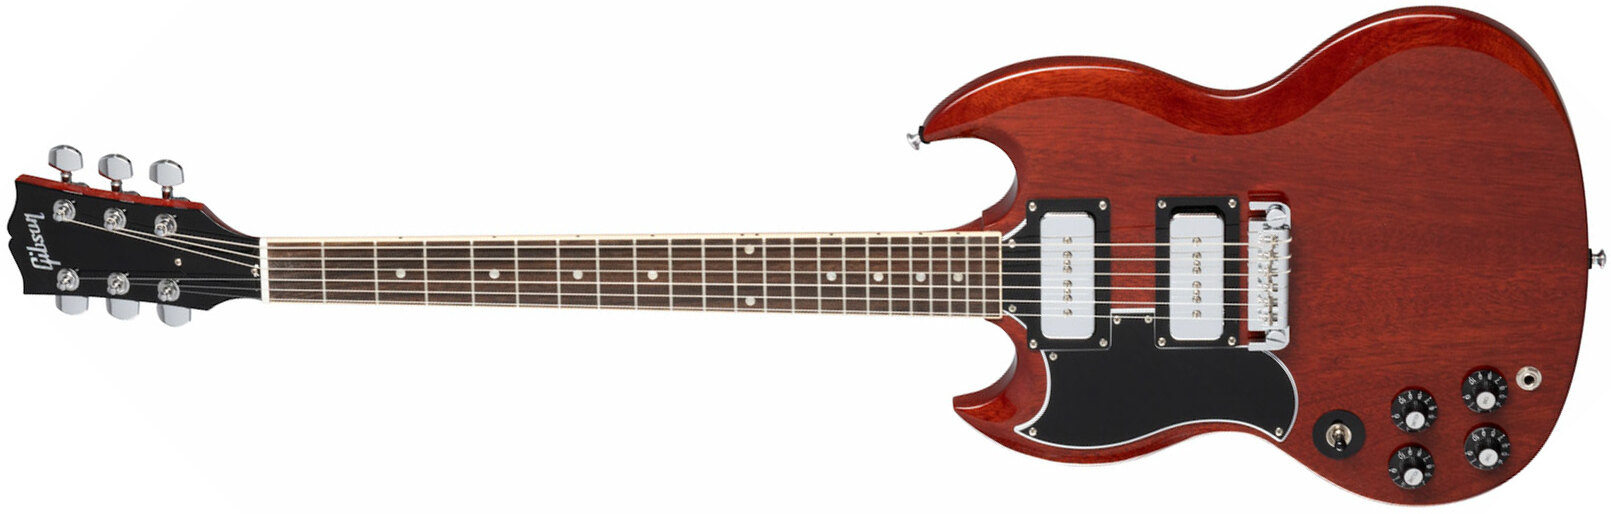 Gibson Sg Tony Iommi Special Lh Gaucher Signature 2p90 Ht Rw - Vintage Cherry - Guitarra electrica para zurdos - Main picture